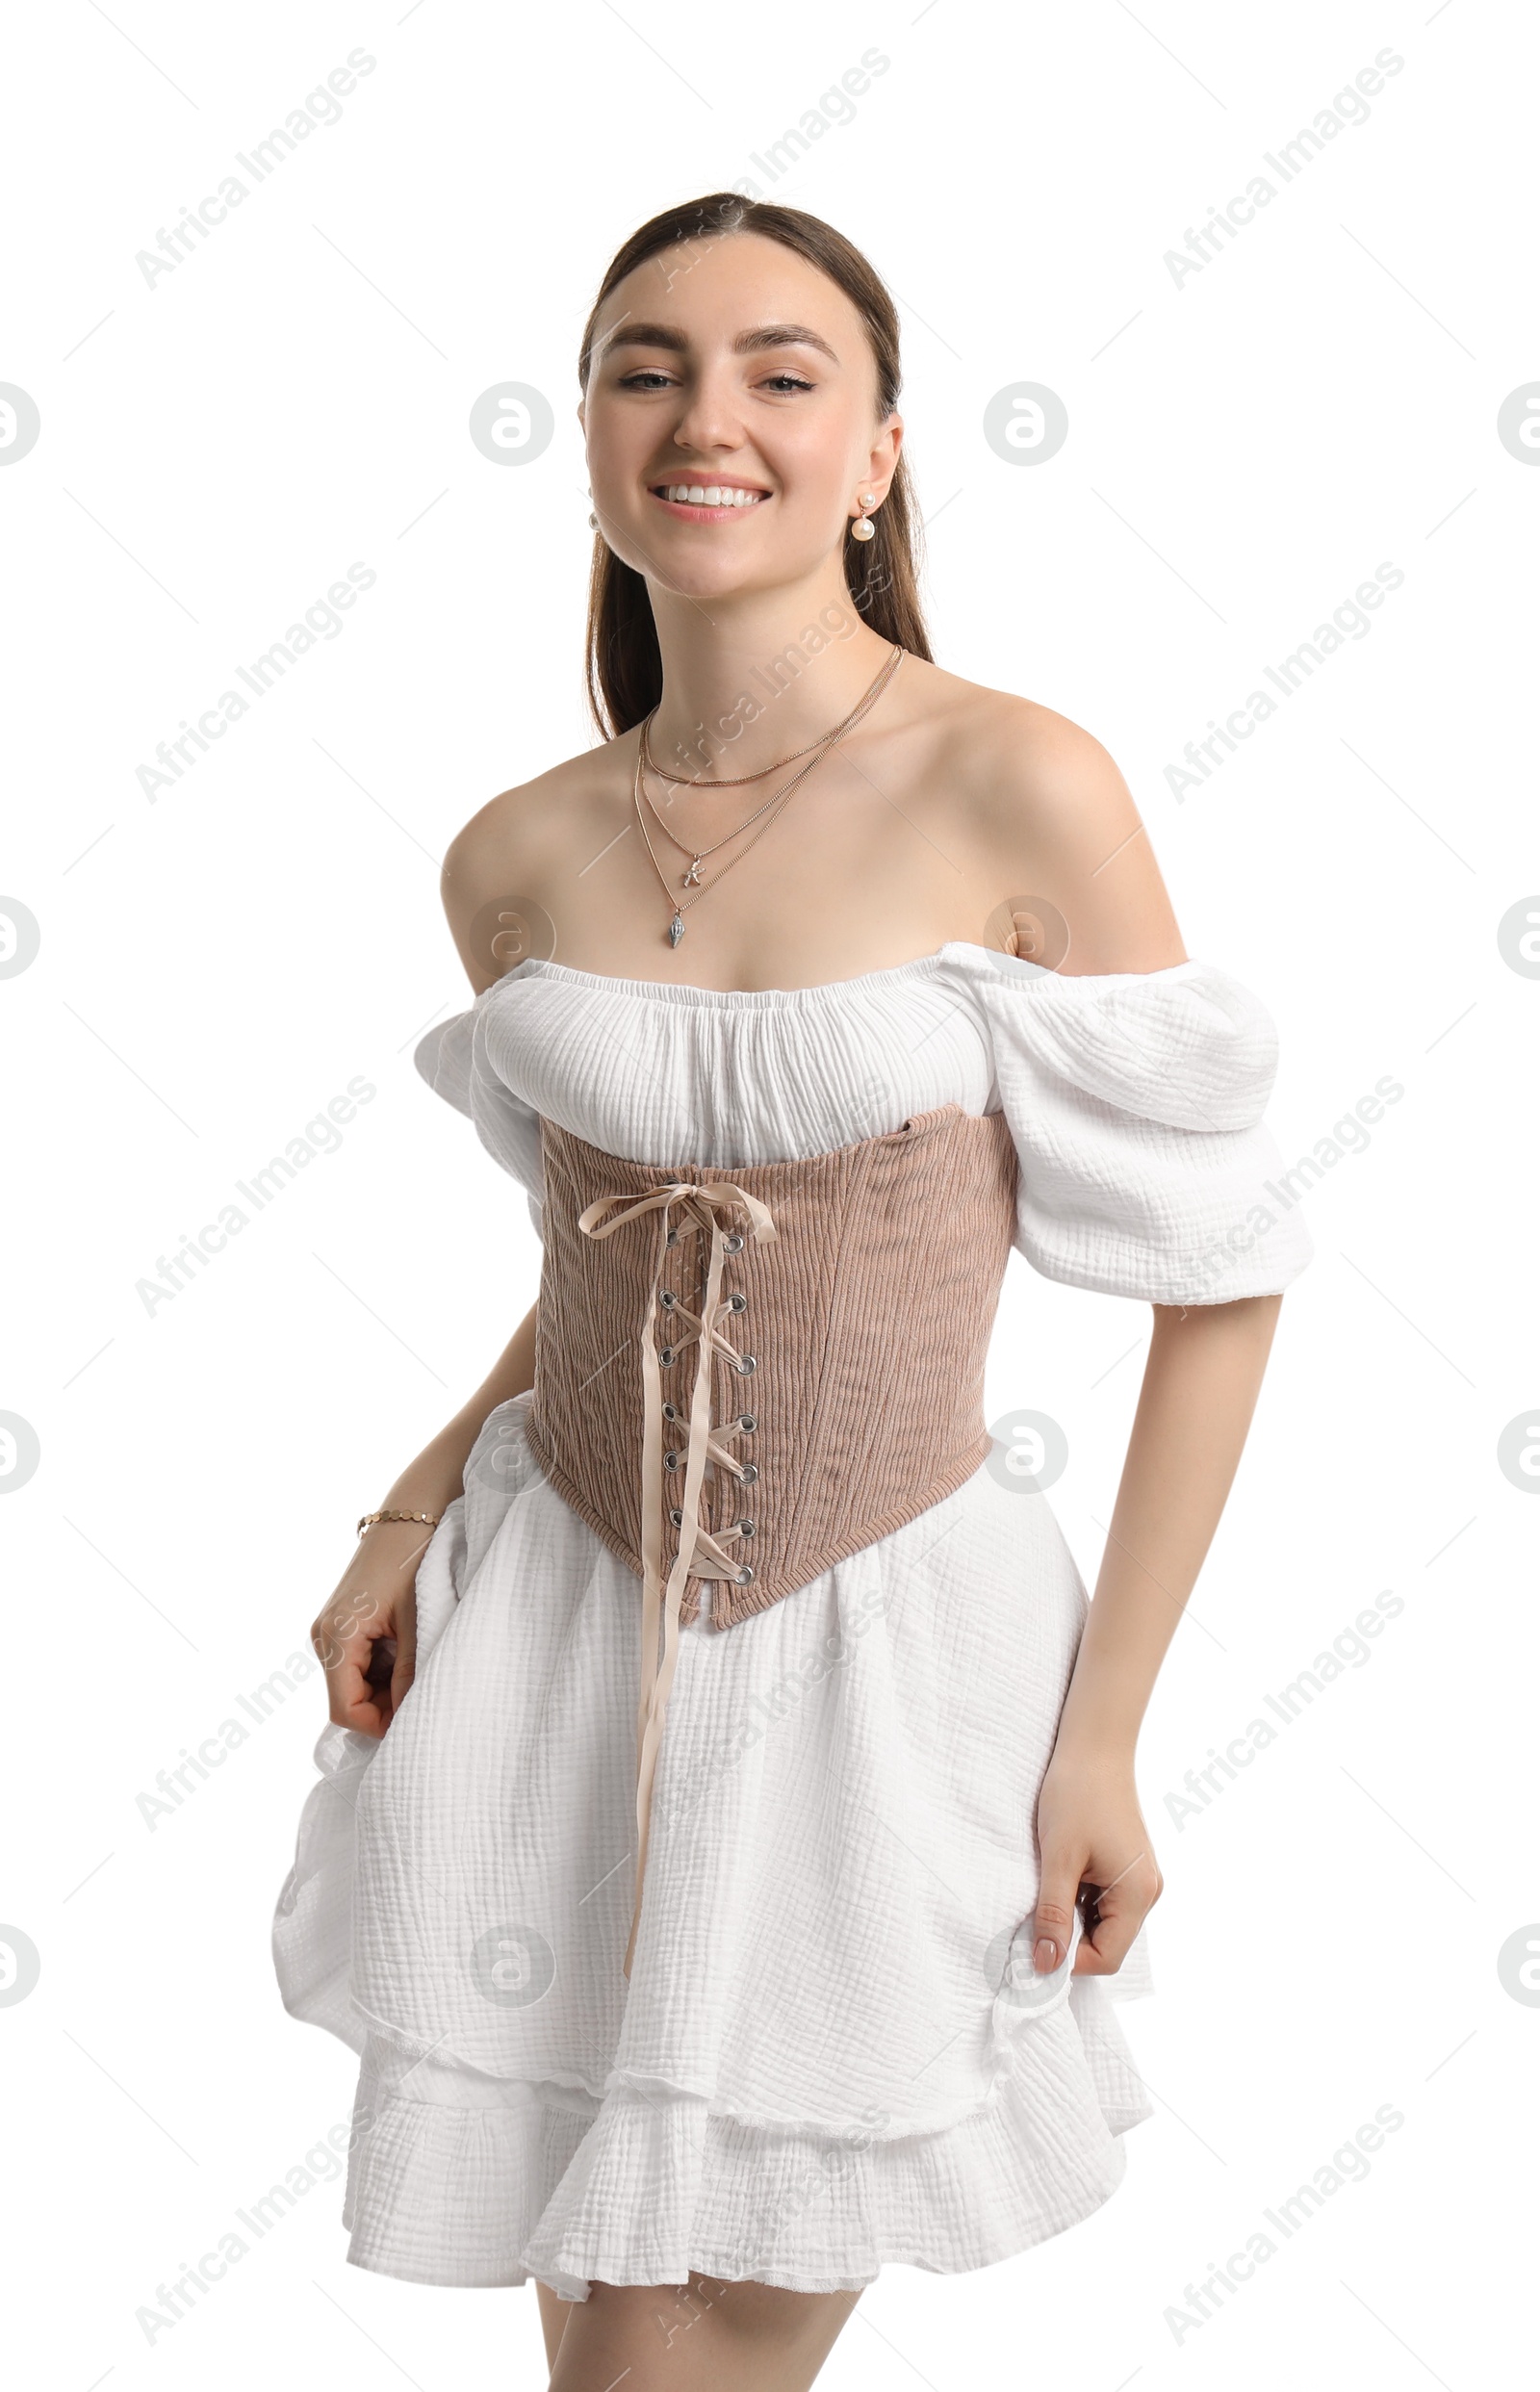 Photo of Smiling woman in velvet corset posing on white background